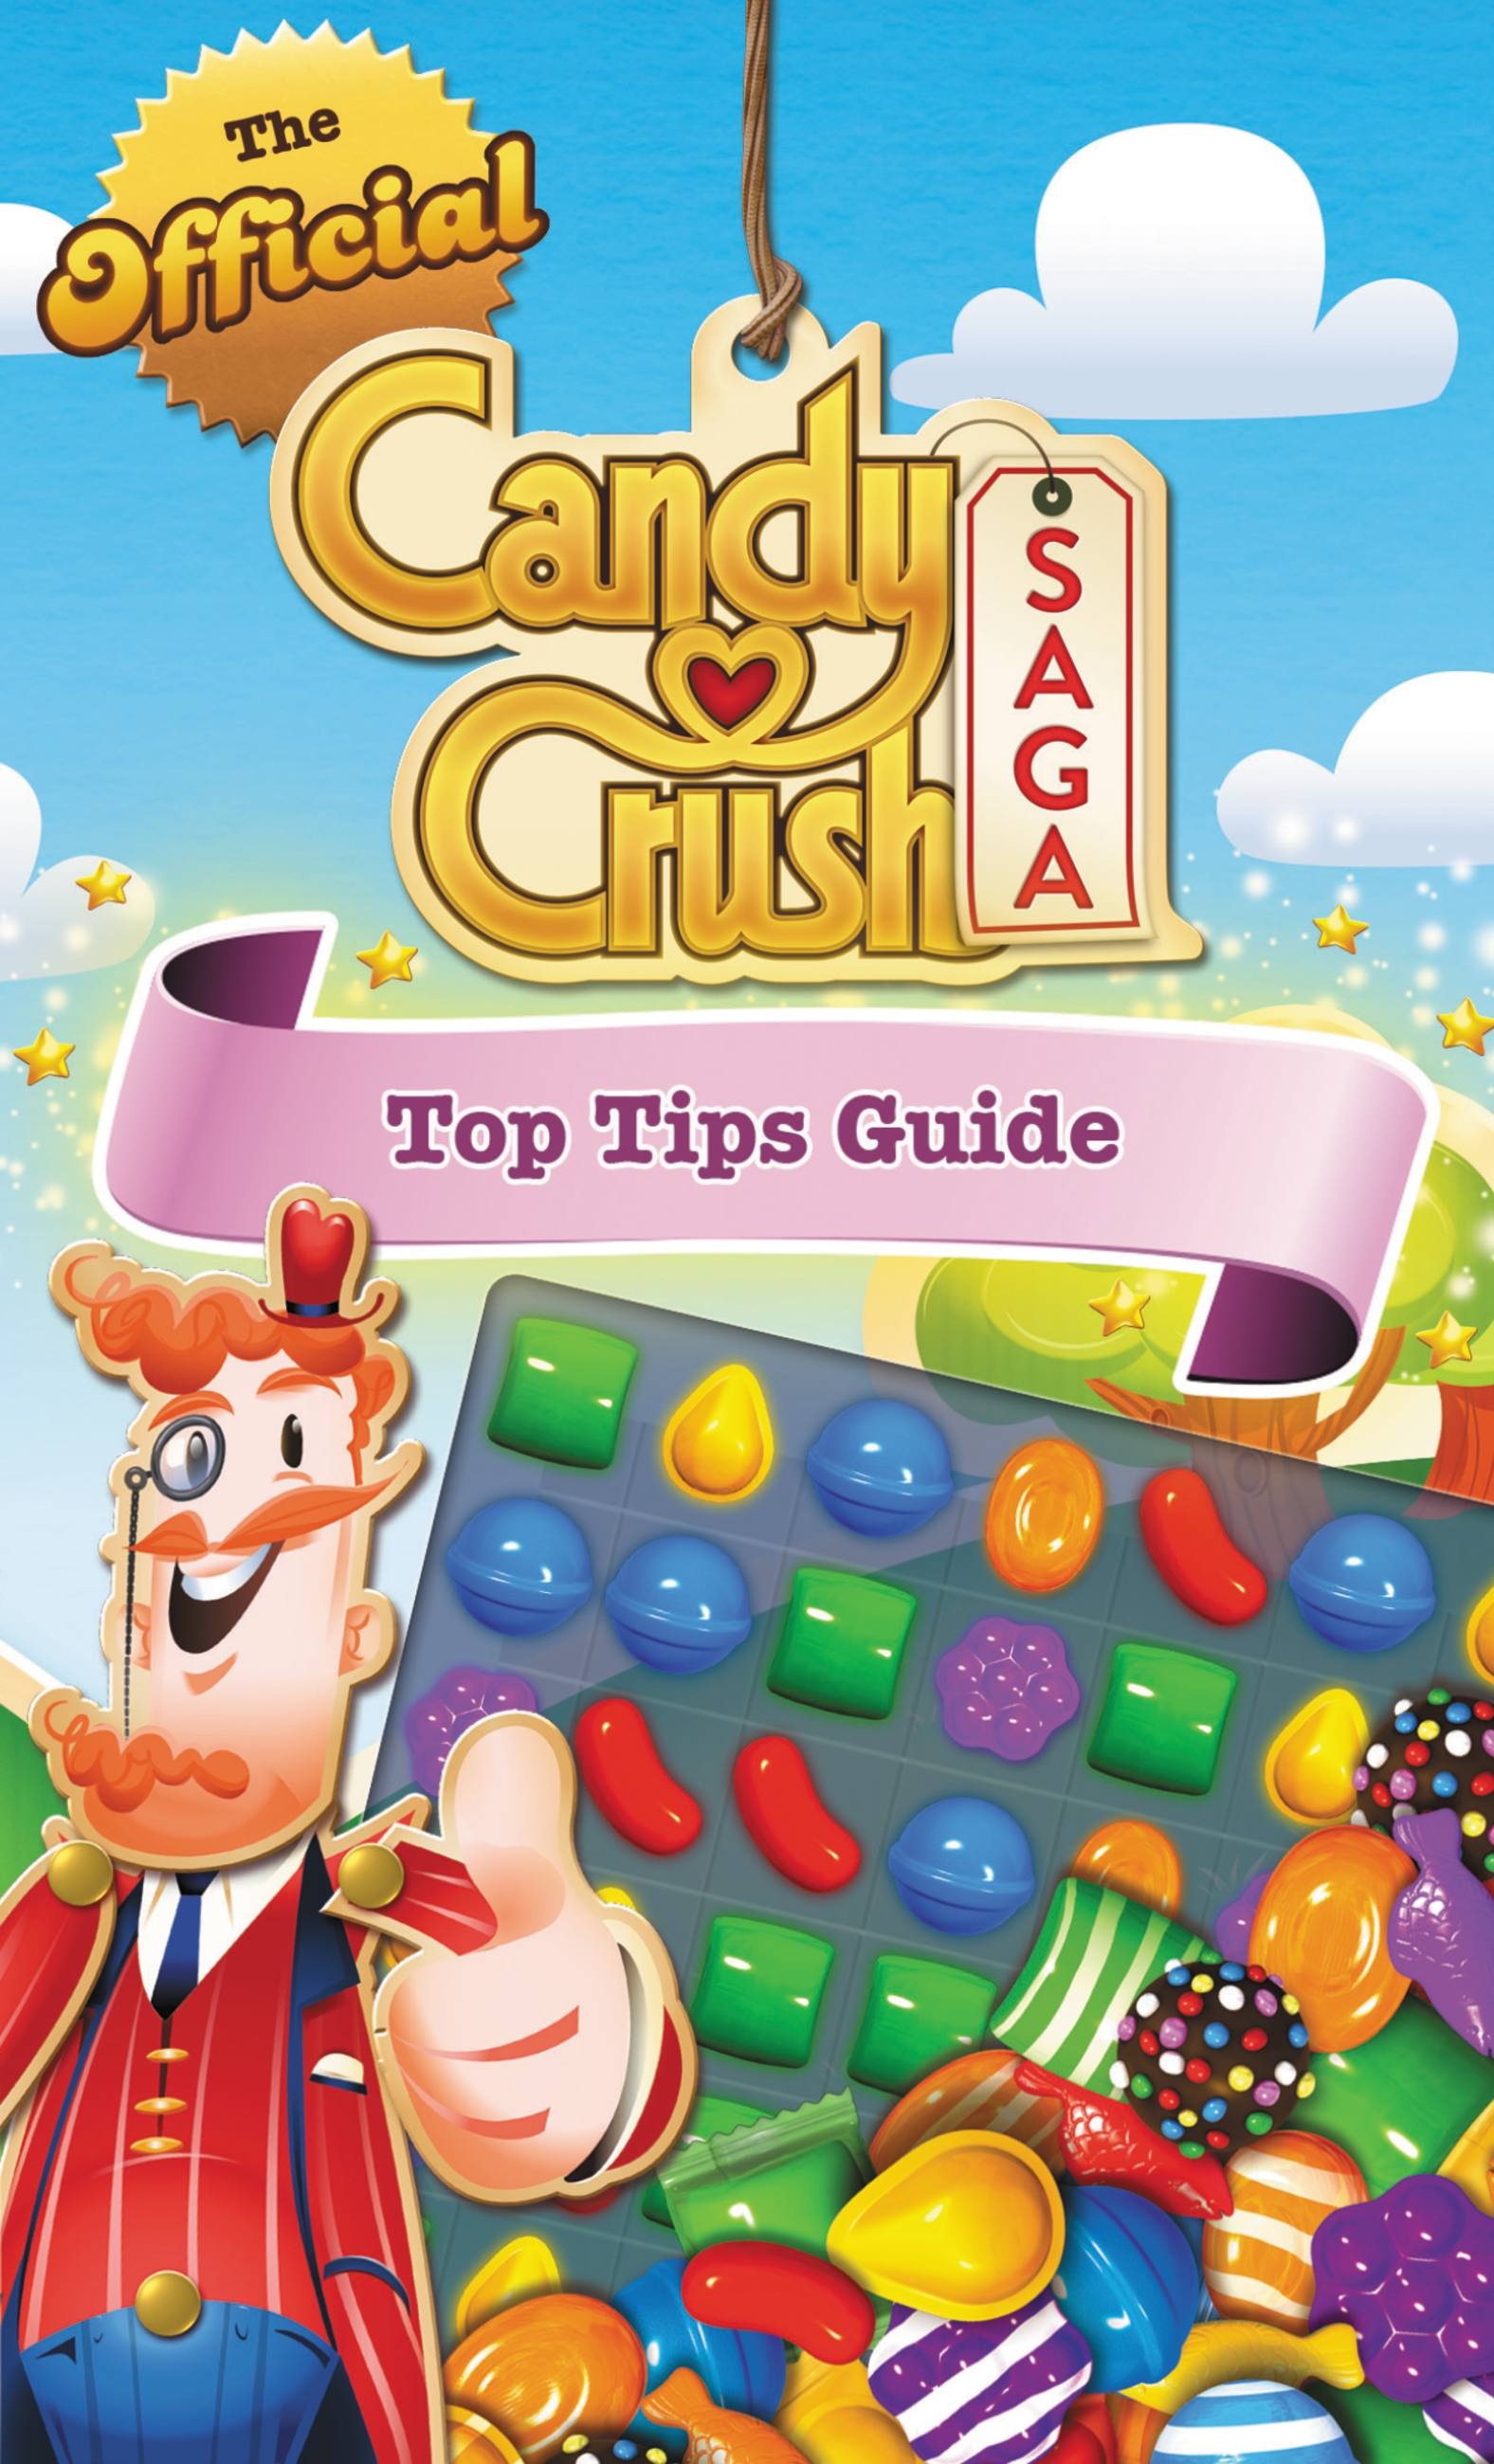 Candy Crush Saga updated their cover photo. - Candy Crush Saga